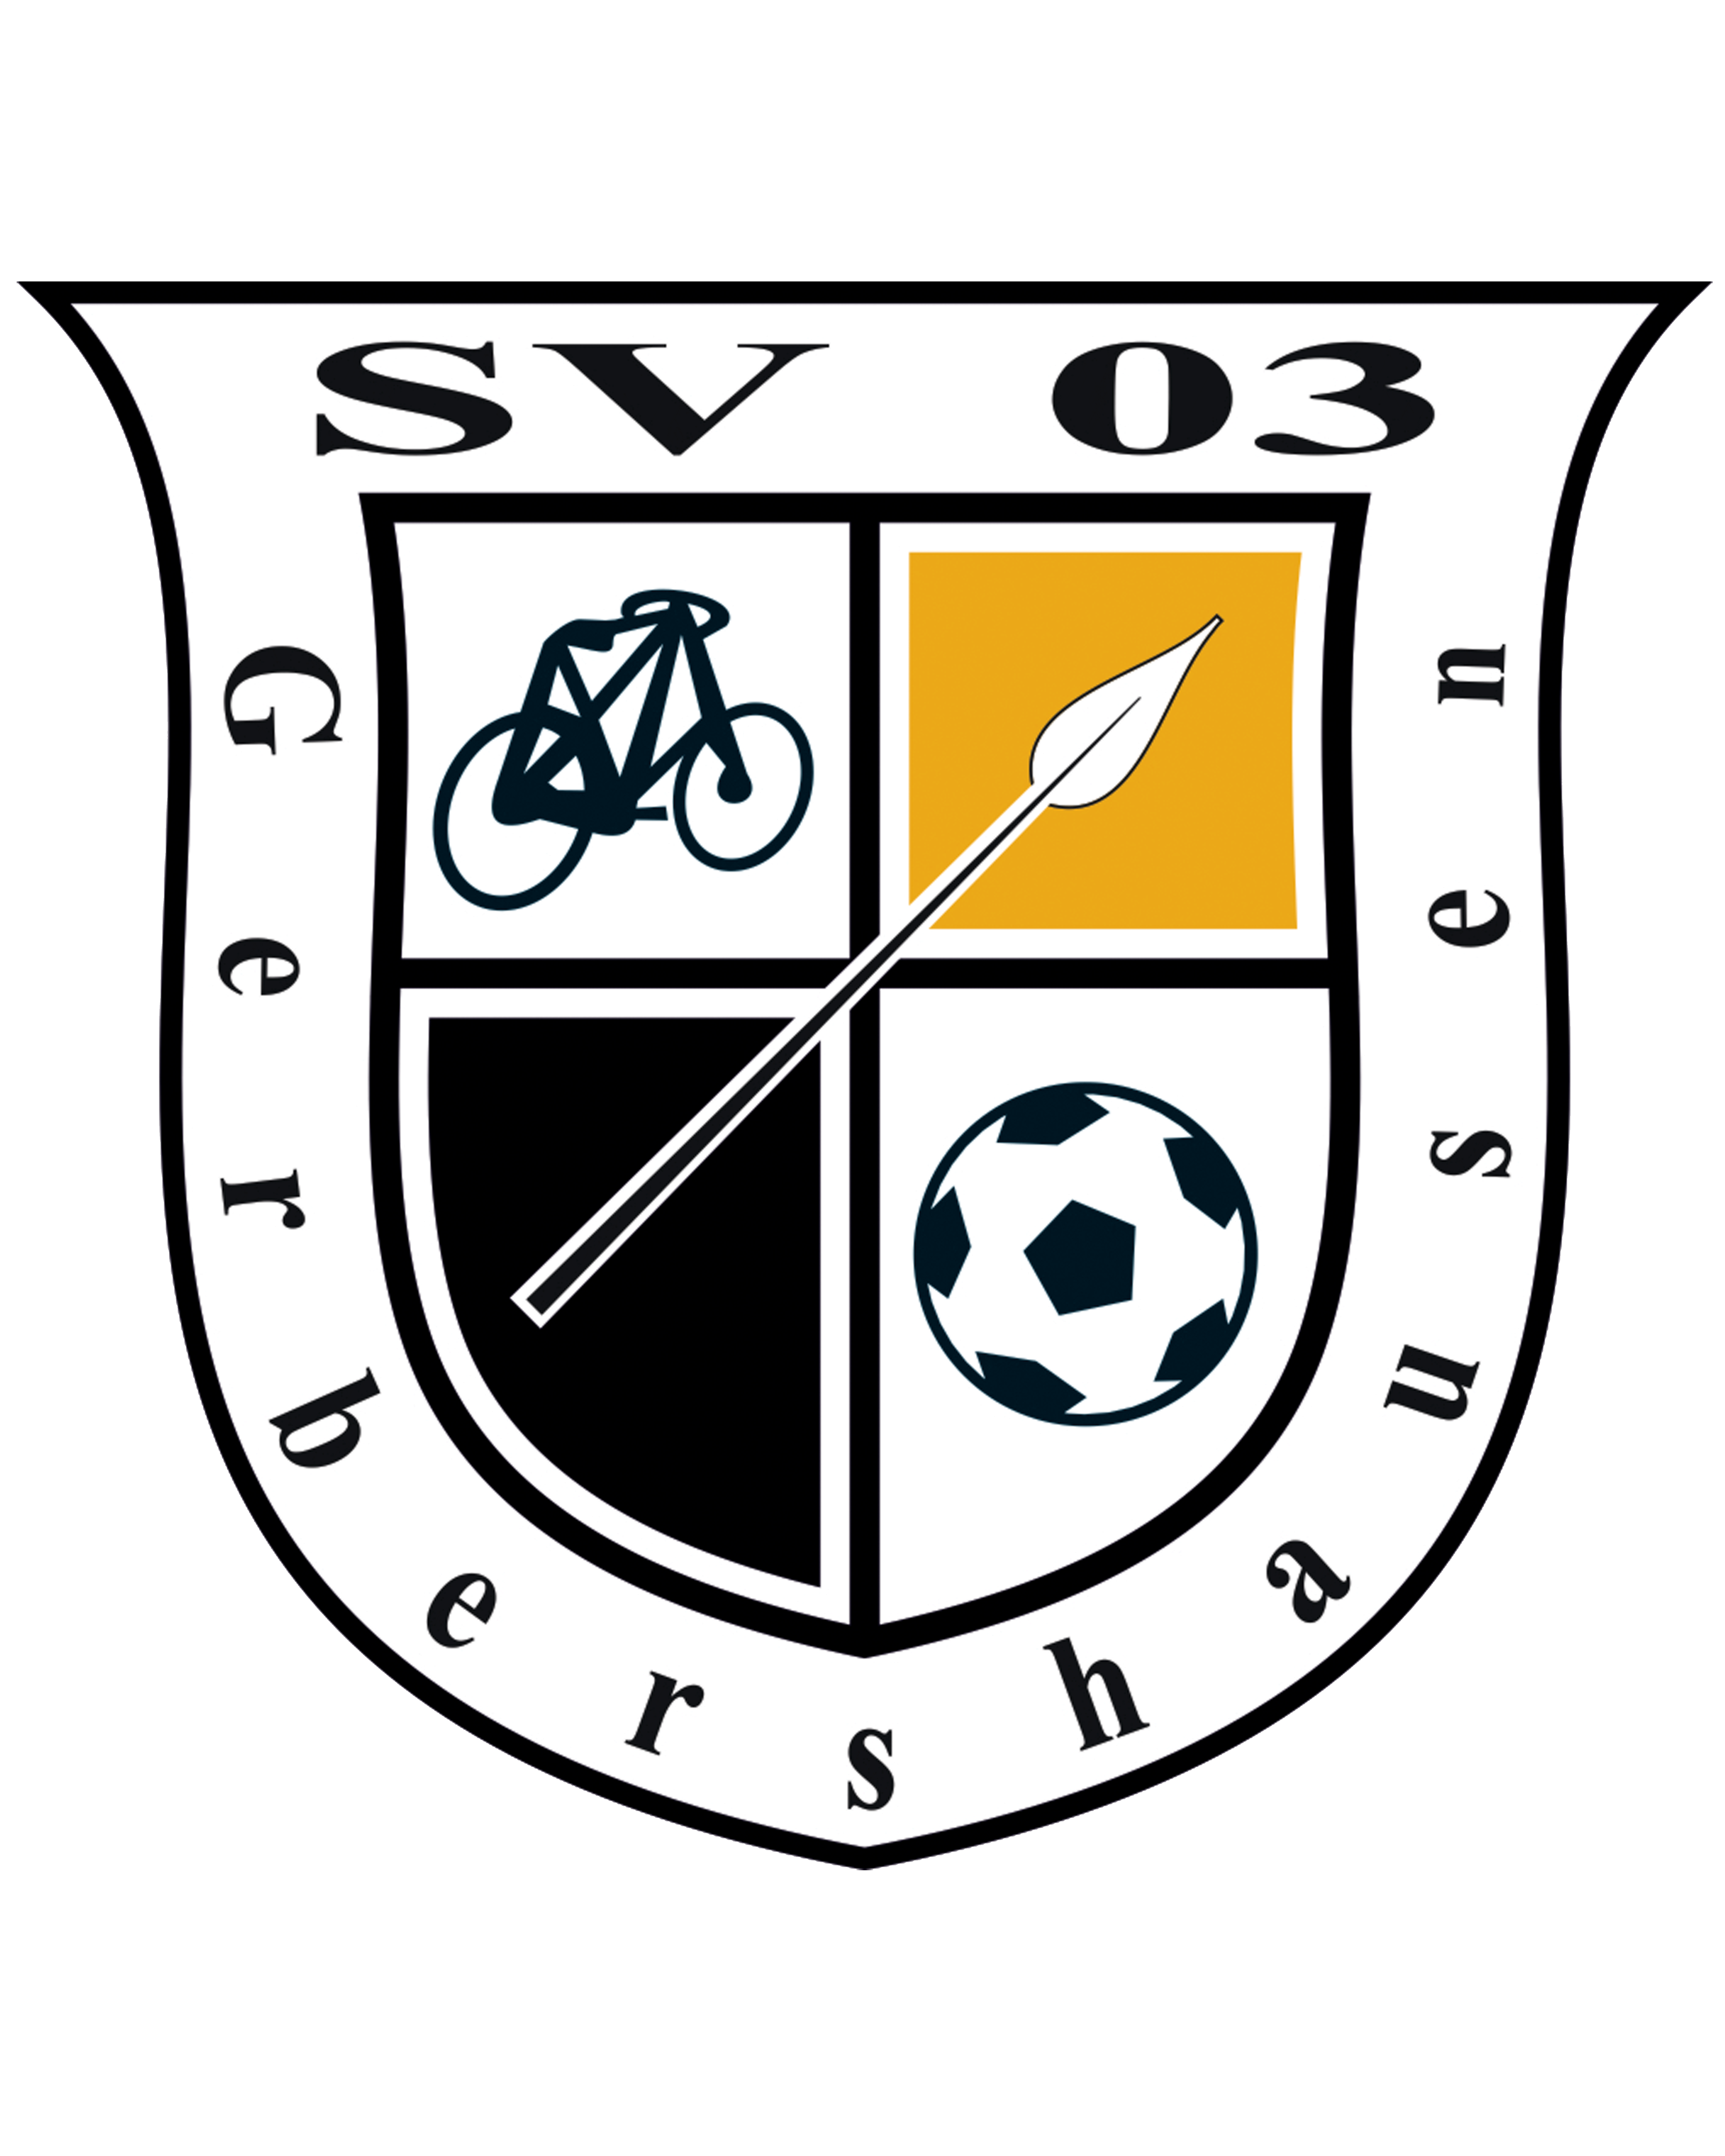 Logo SV03